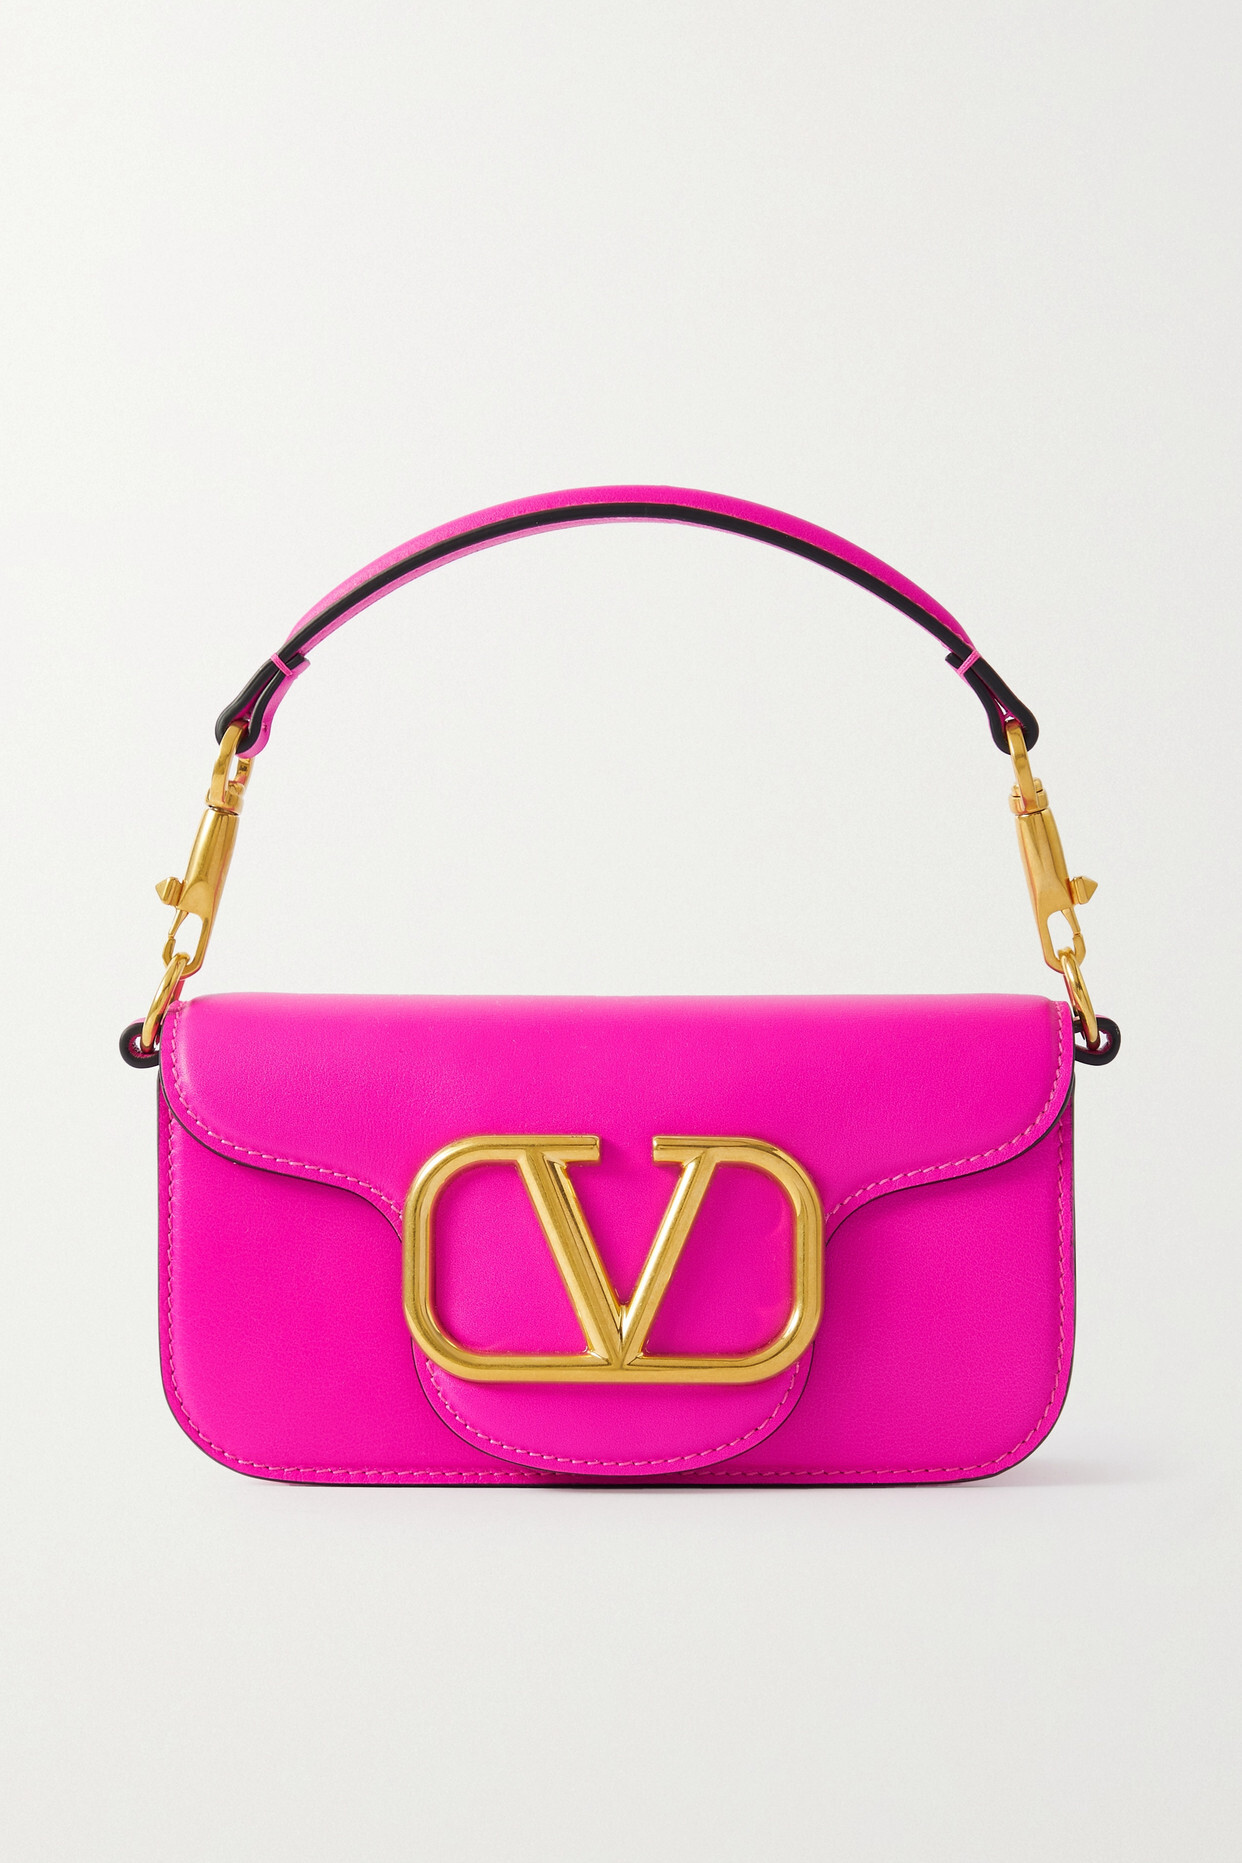 Valentino - Valentino Garavani Vlogo Leather Shoulder Bag - Pink